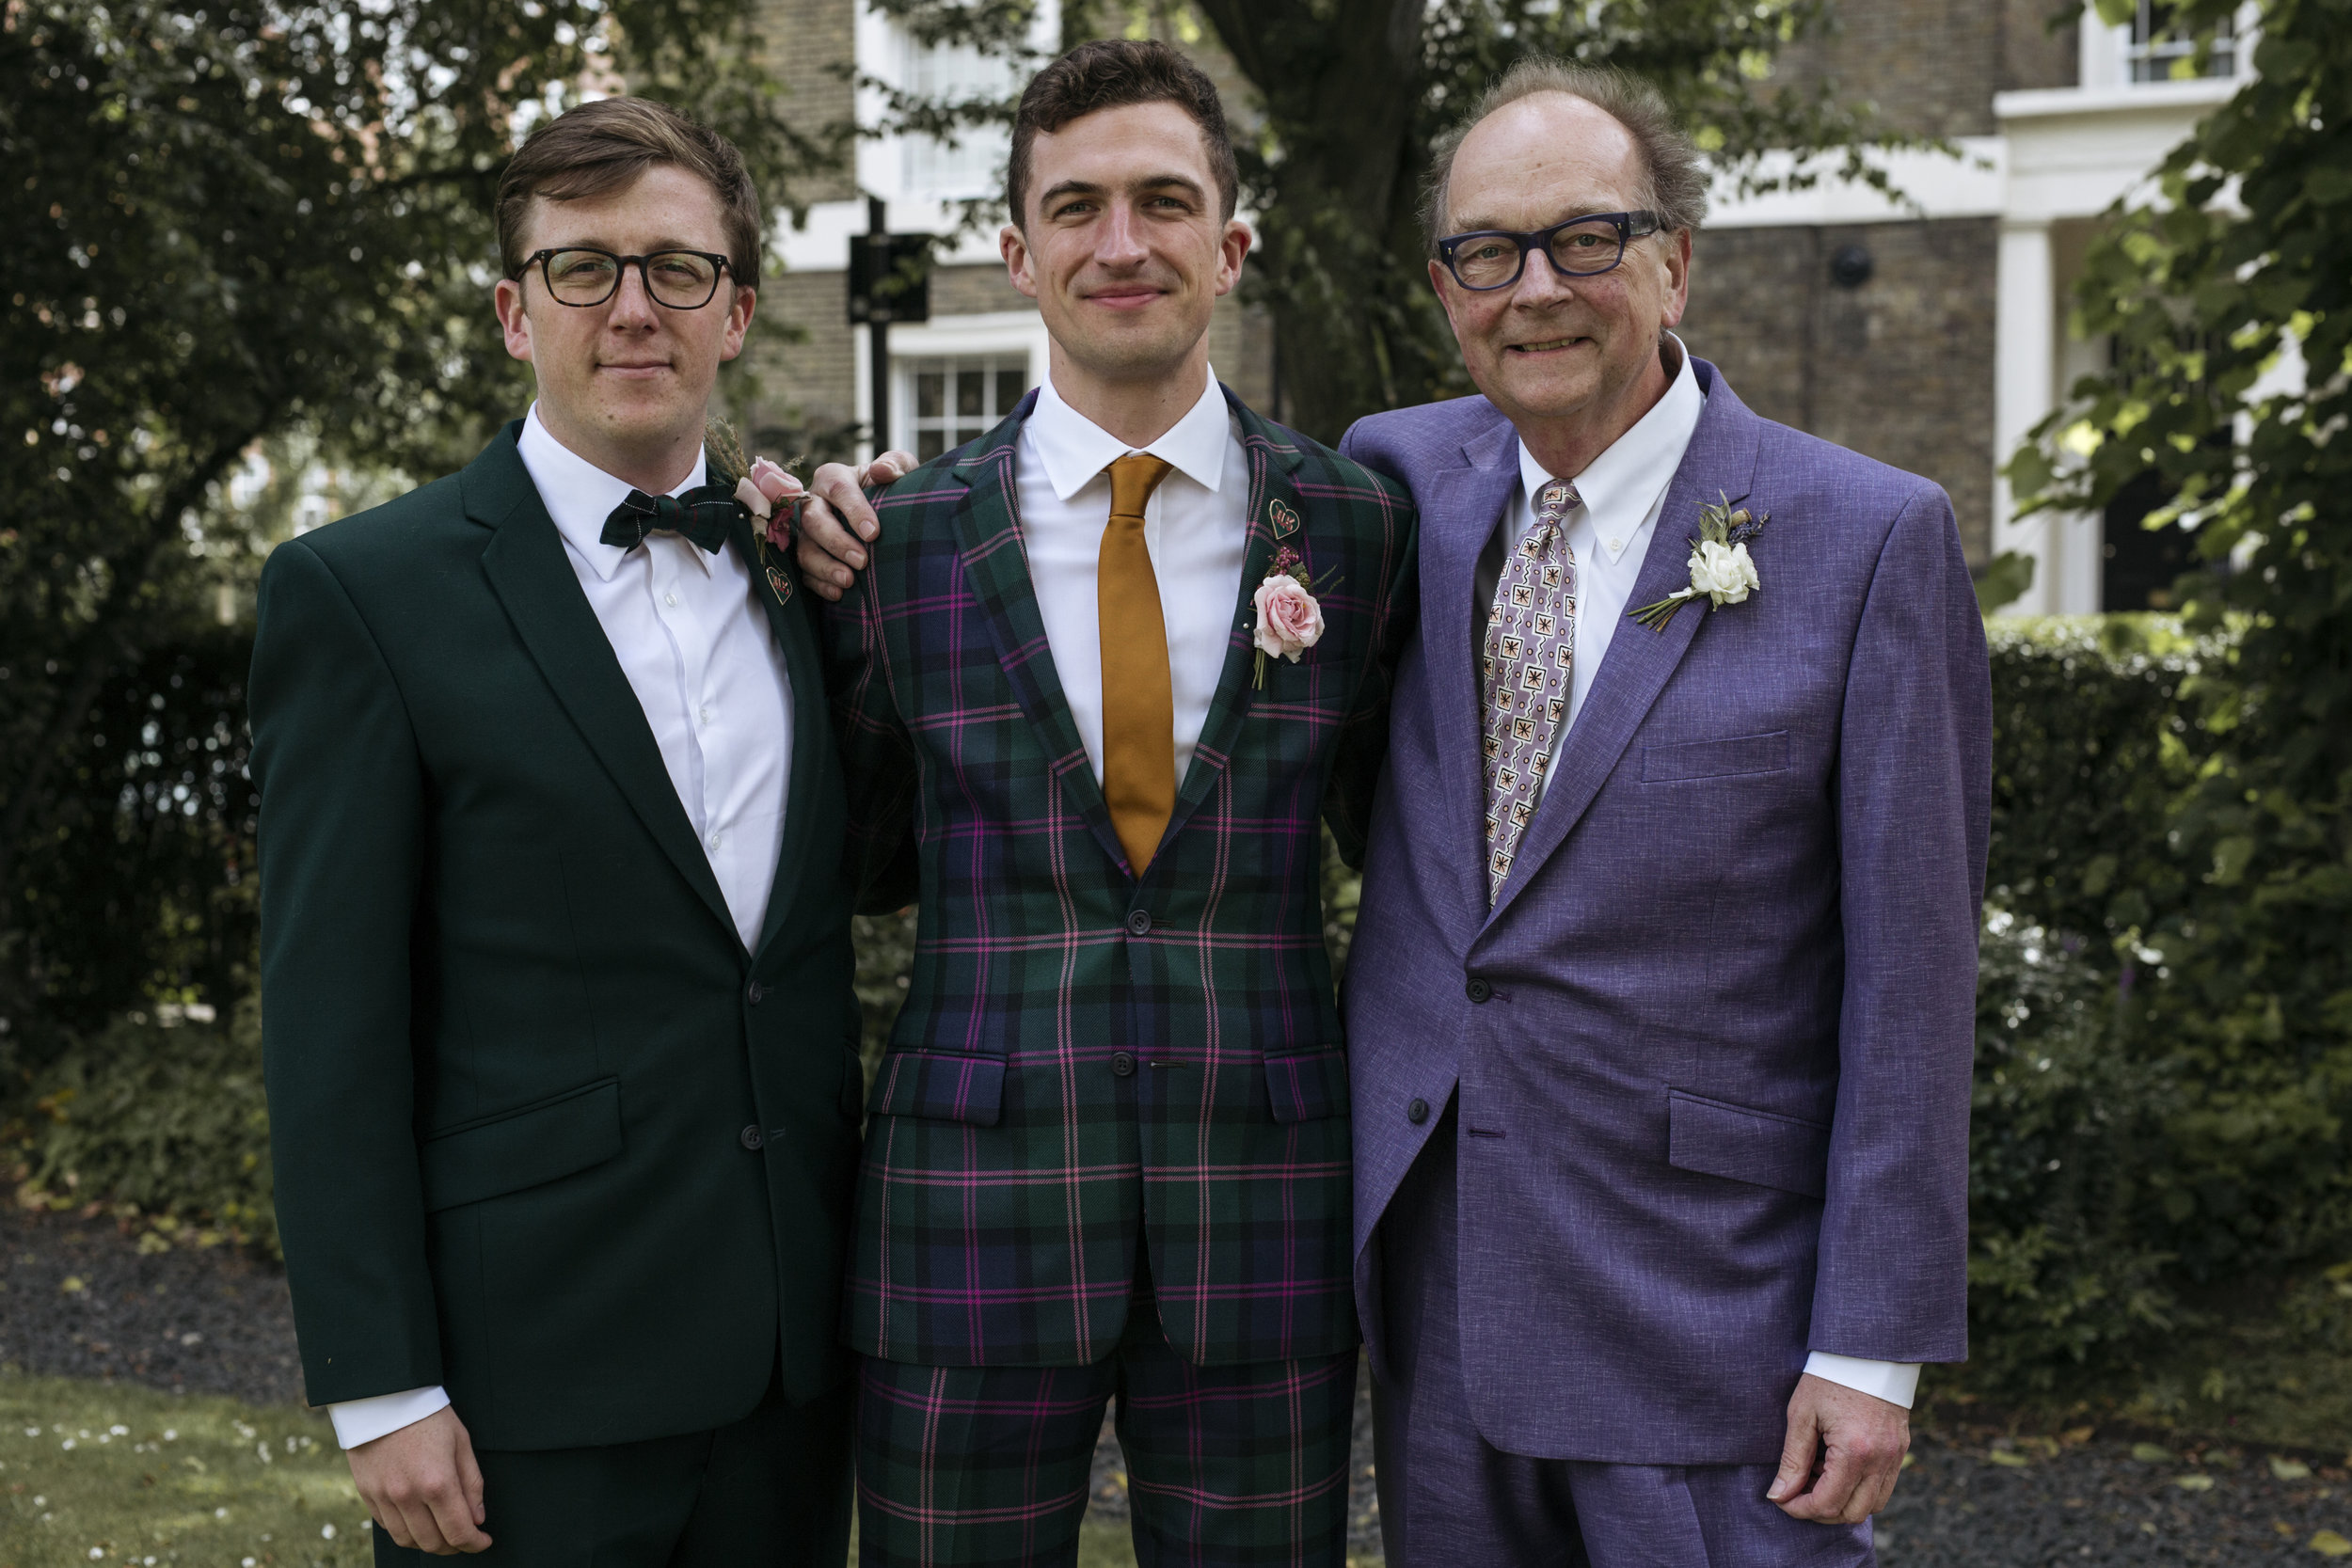 bespoke-tartan-suit-dugdale-purple-dormeuil-susannah-hall-tailor-made-uk-wedding-stylish.jpg